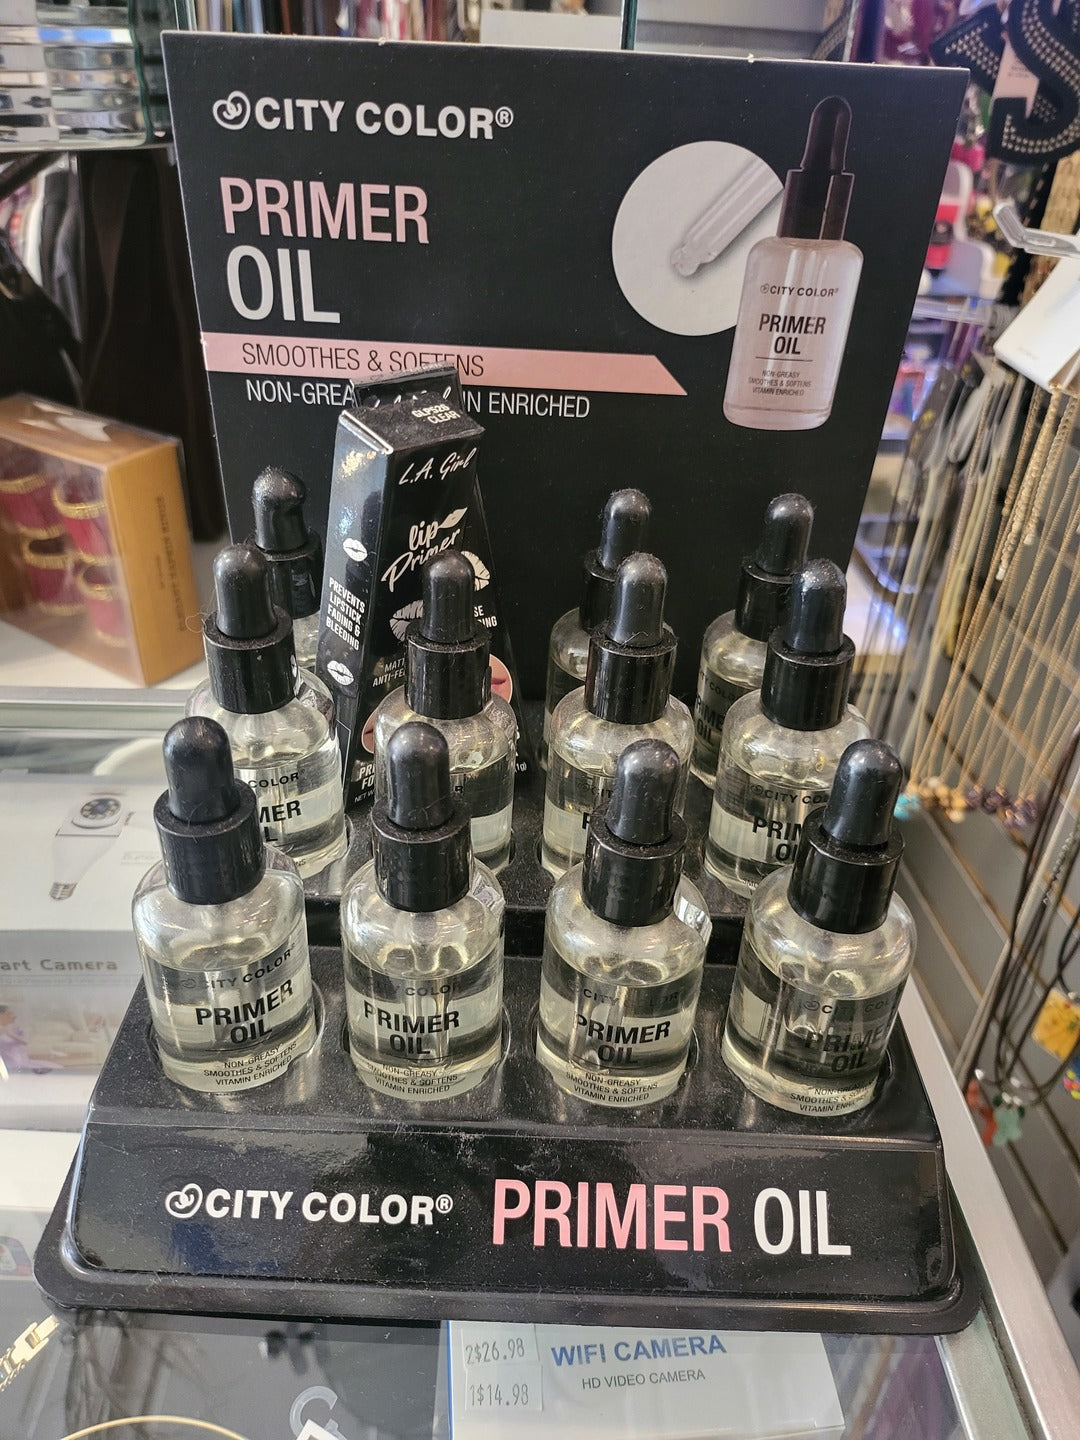 Primer Oil by City Color